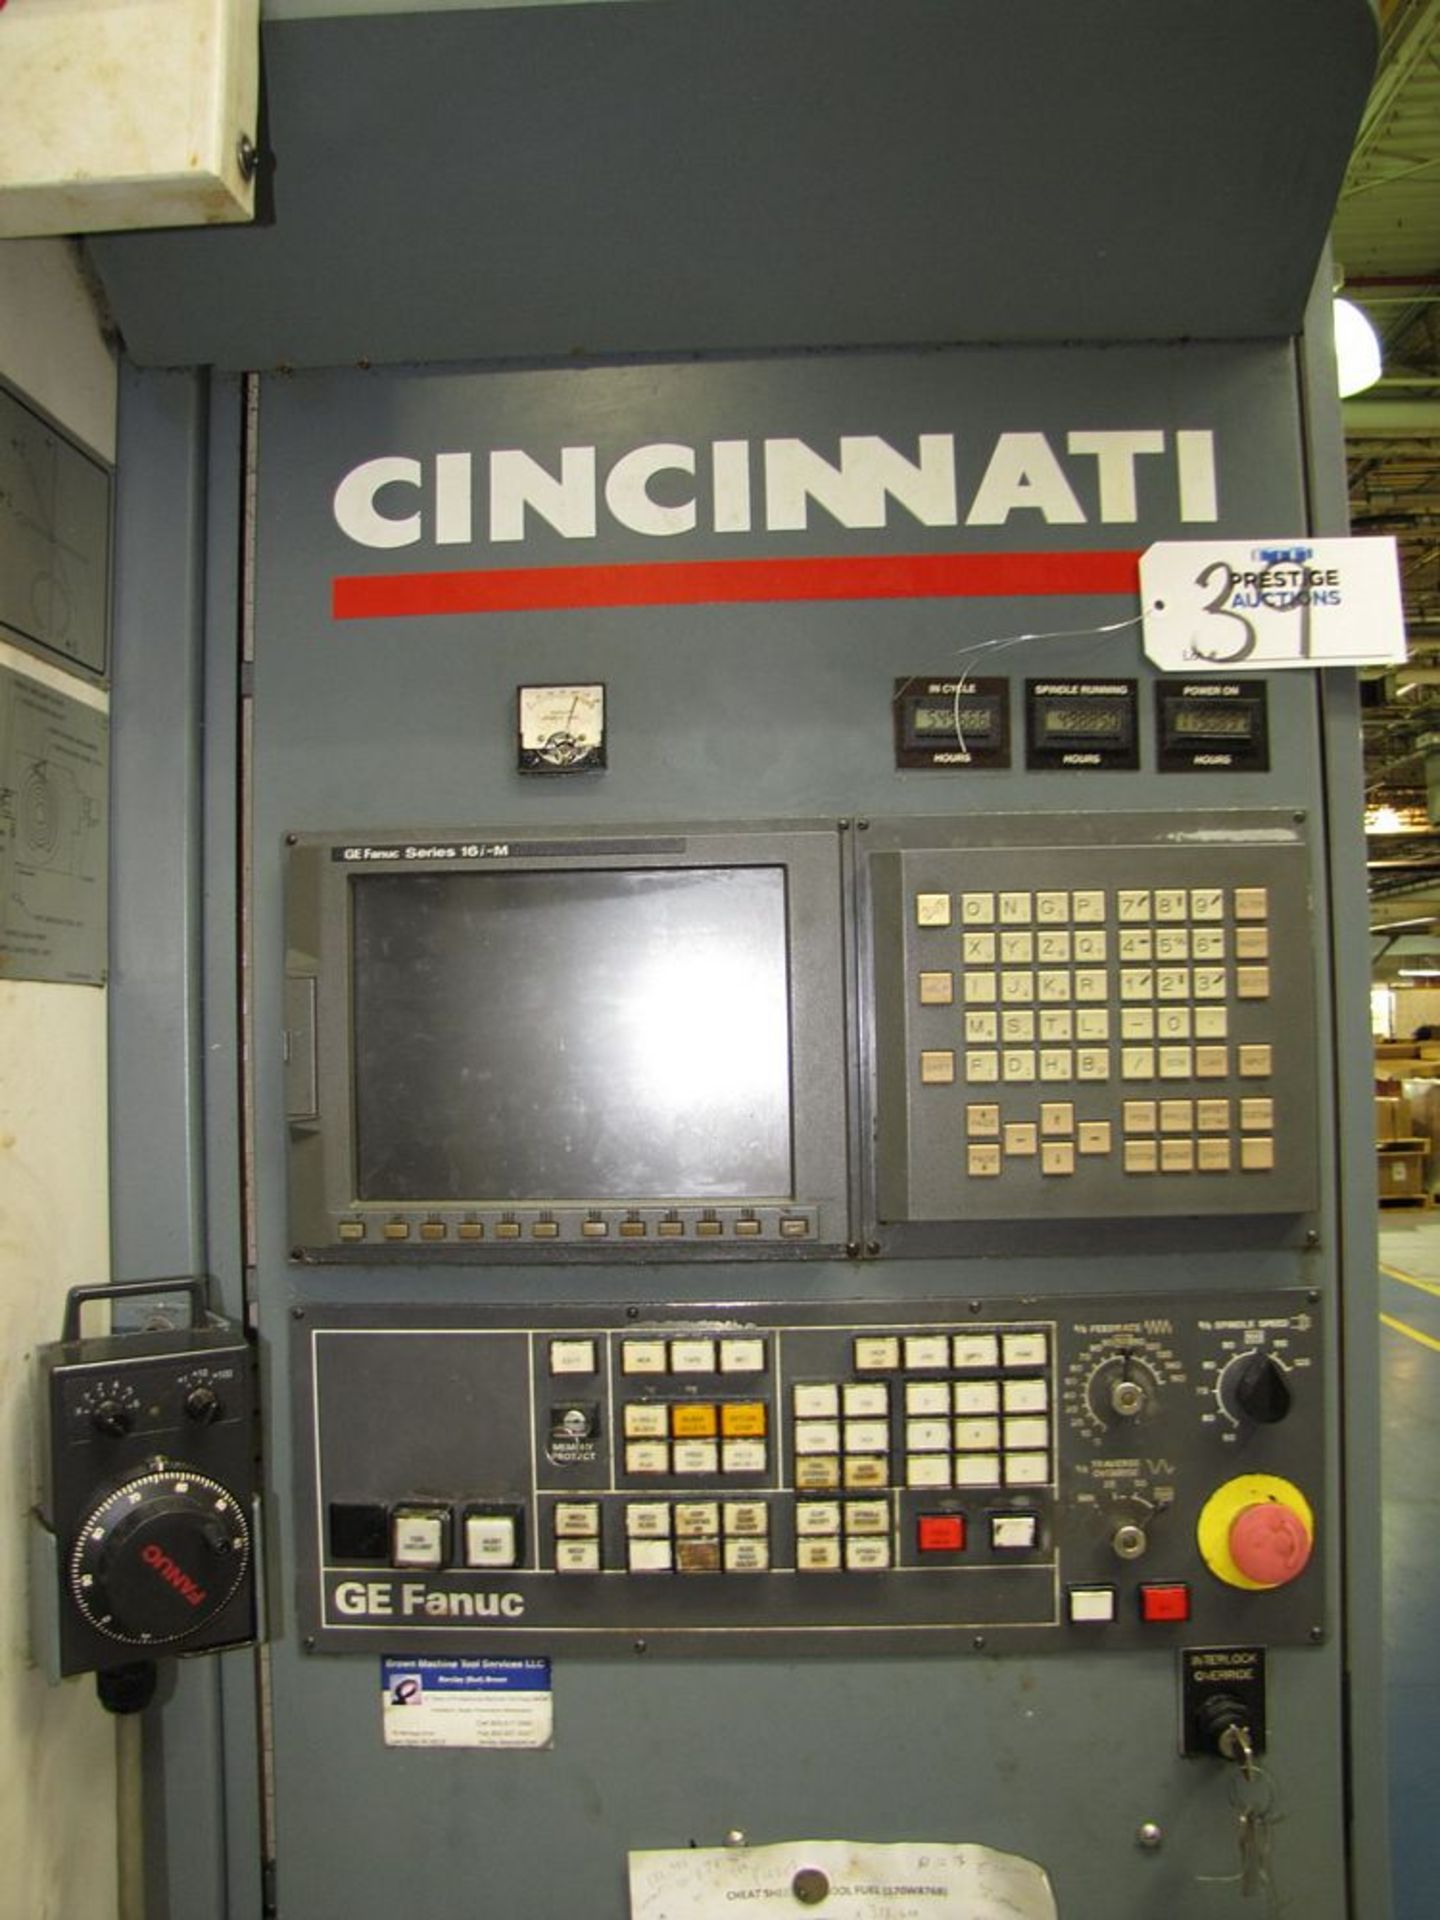 Cincinnati HPC 500 XT CNC Twin Pallet Horizontal Machining Center  - Image 5 of 5